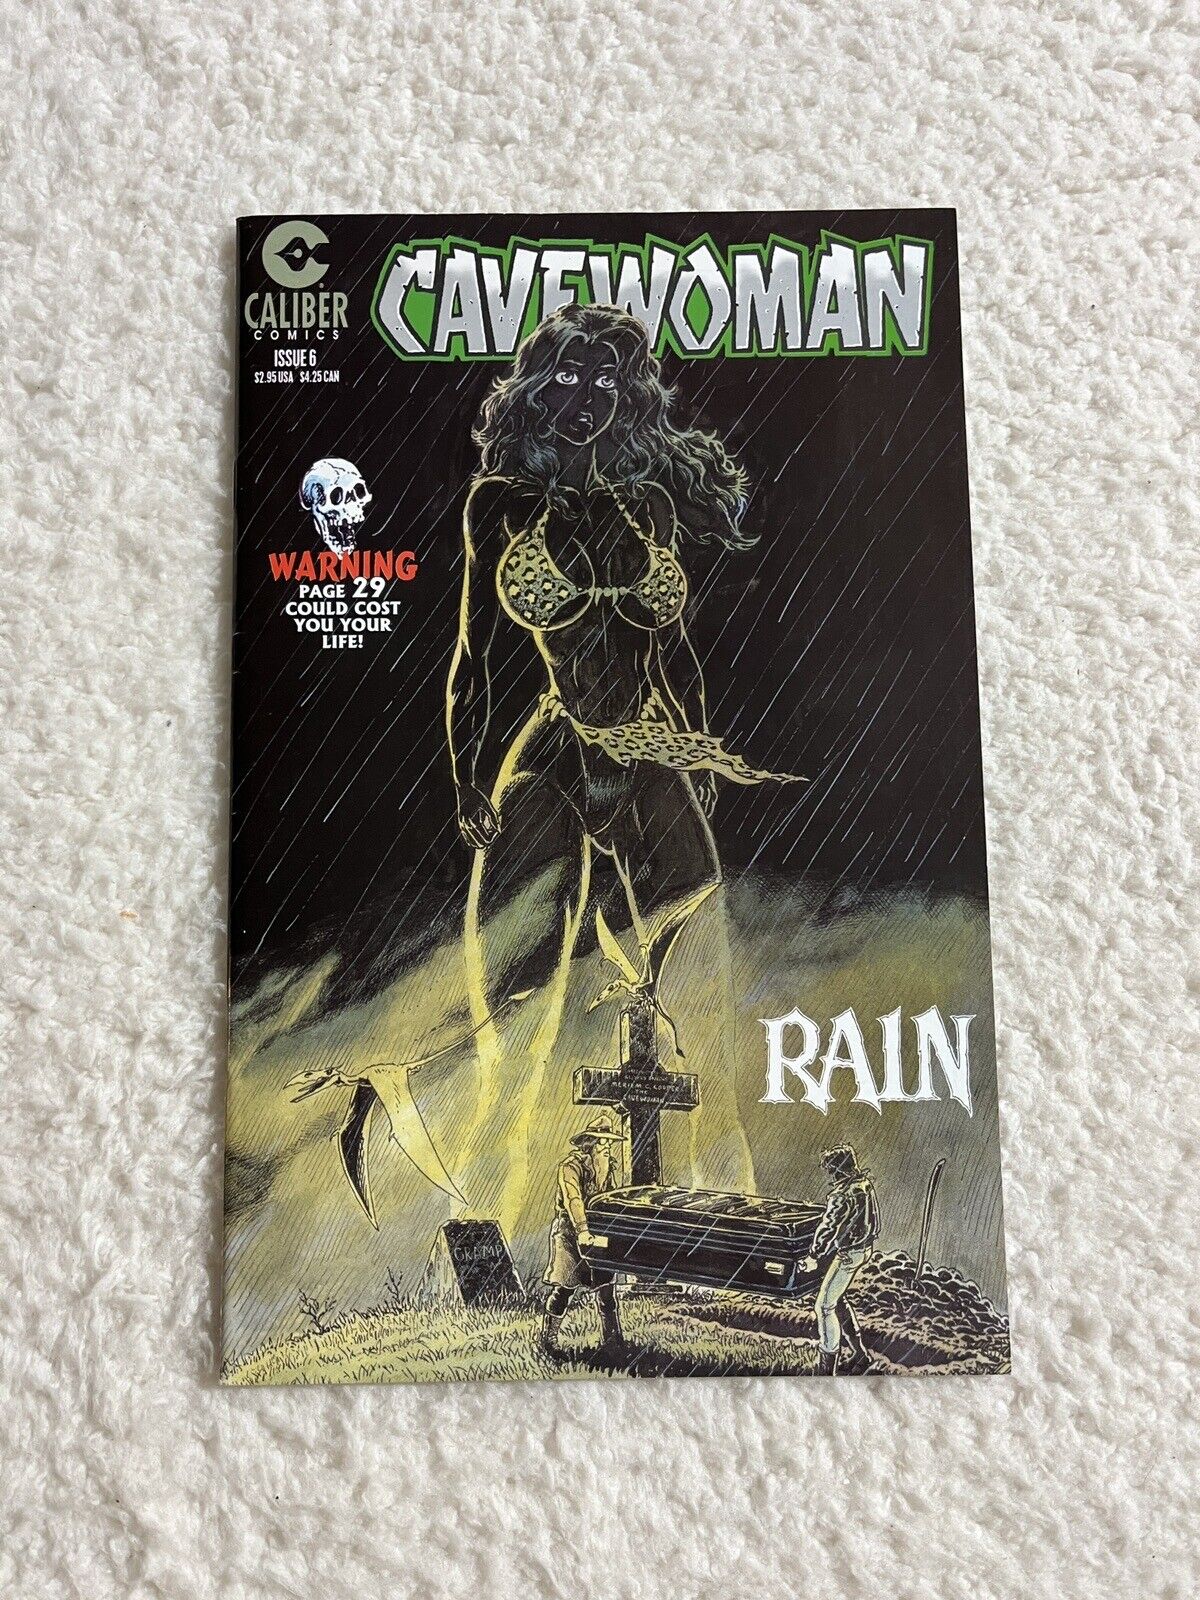 Cavewoman Rain #6 Caliber Comics 1996 Budd Root High Grade